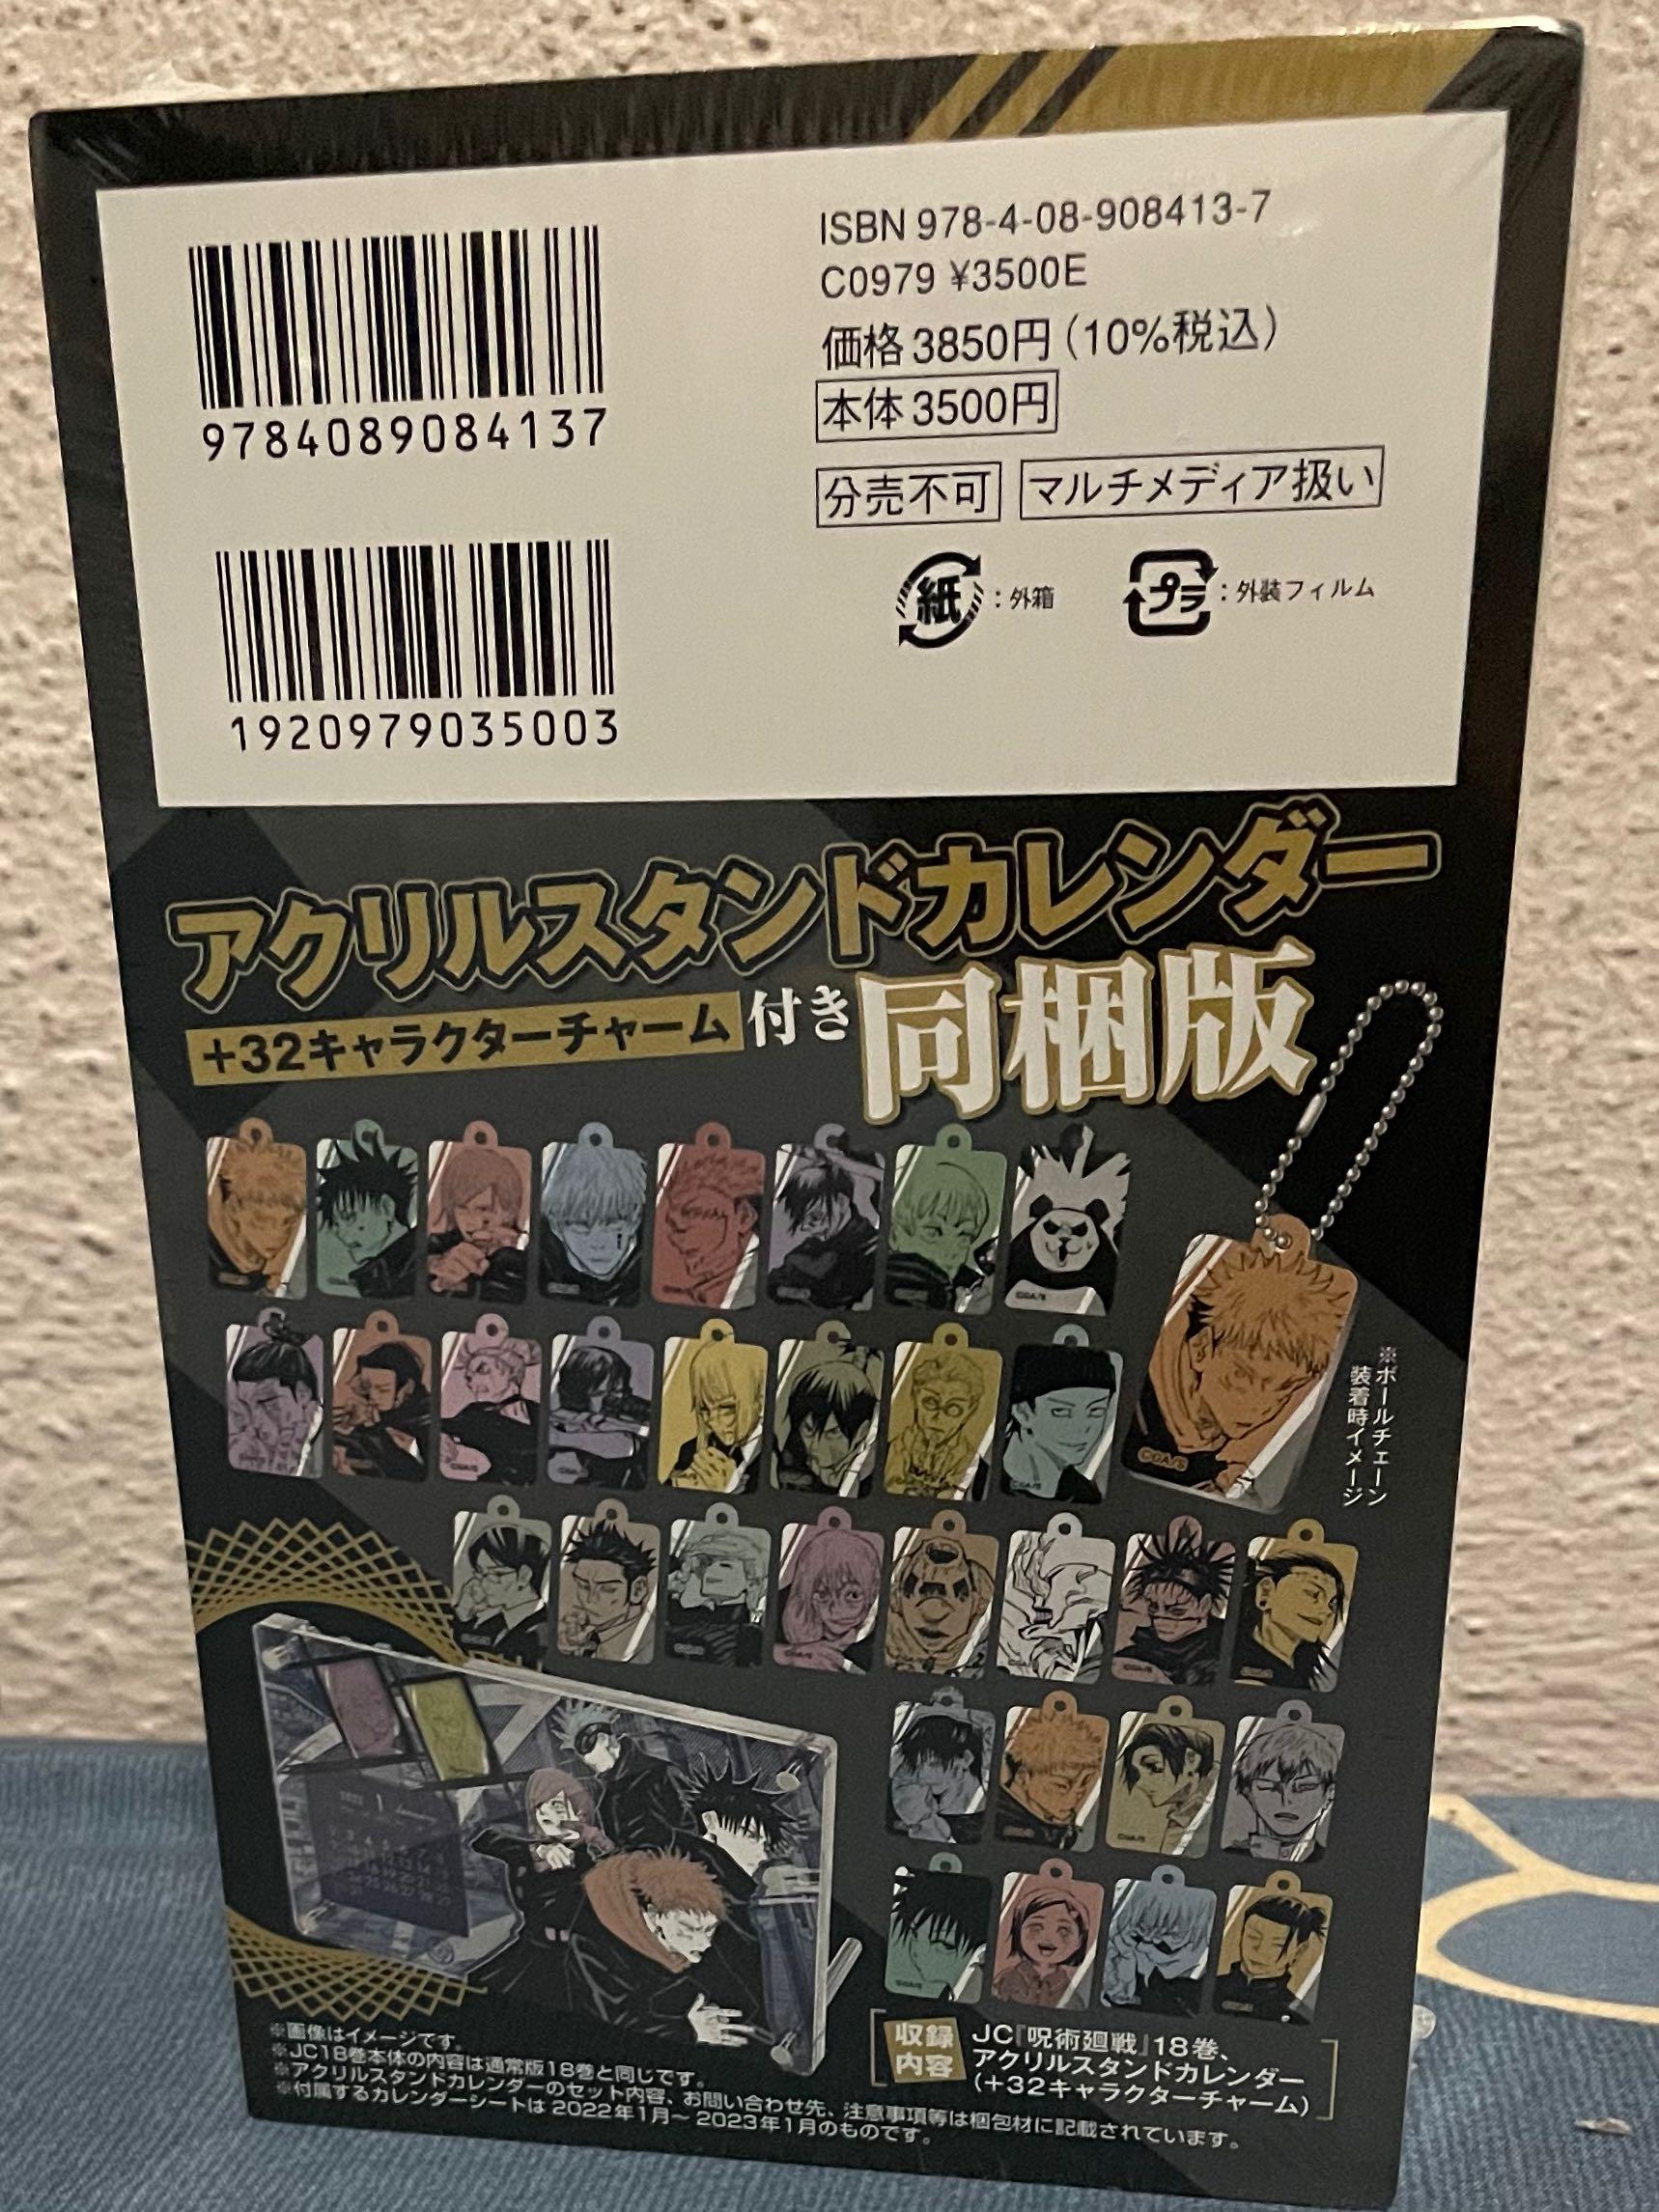 Jujutsu Kaisen Vol 18 Special edition